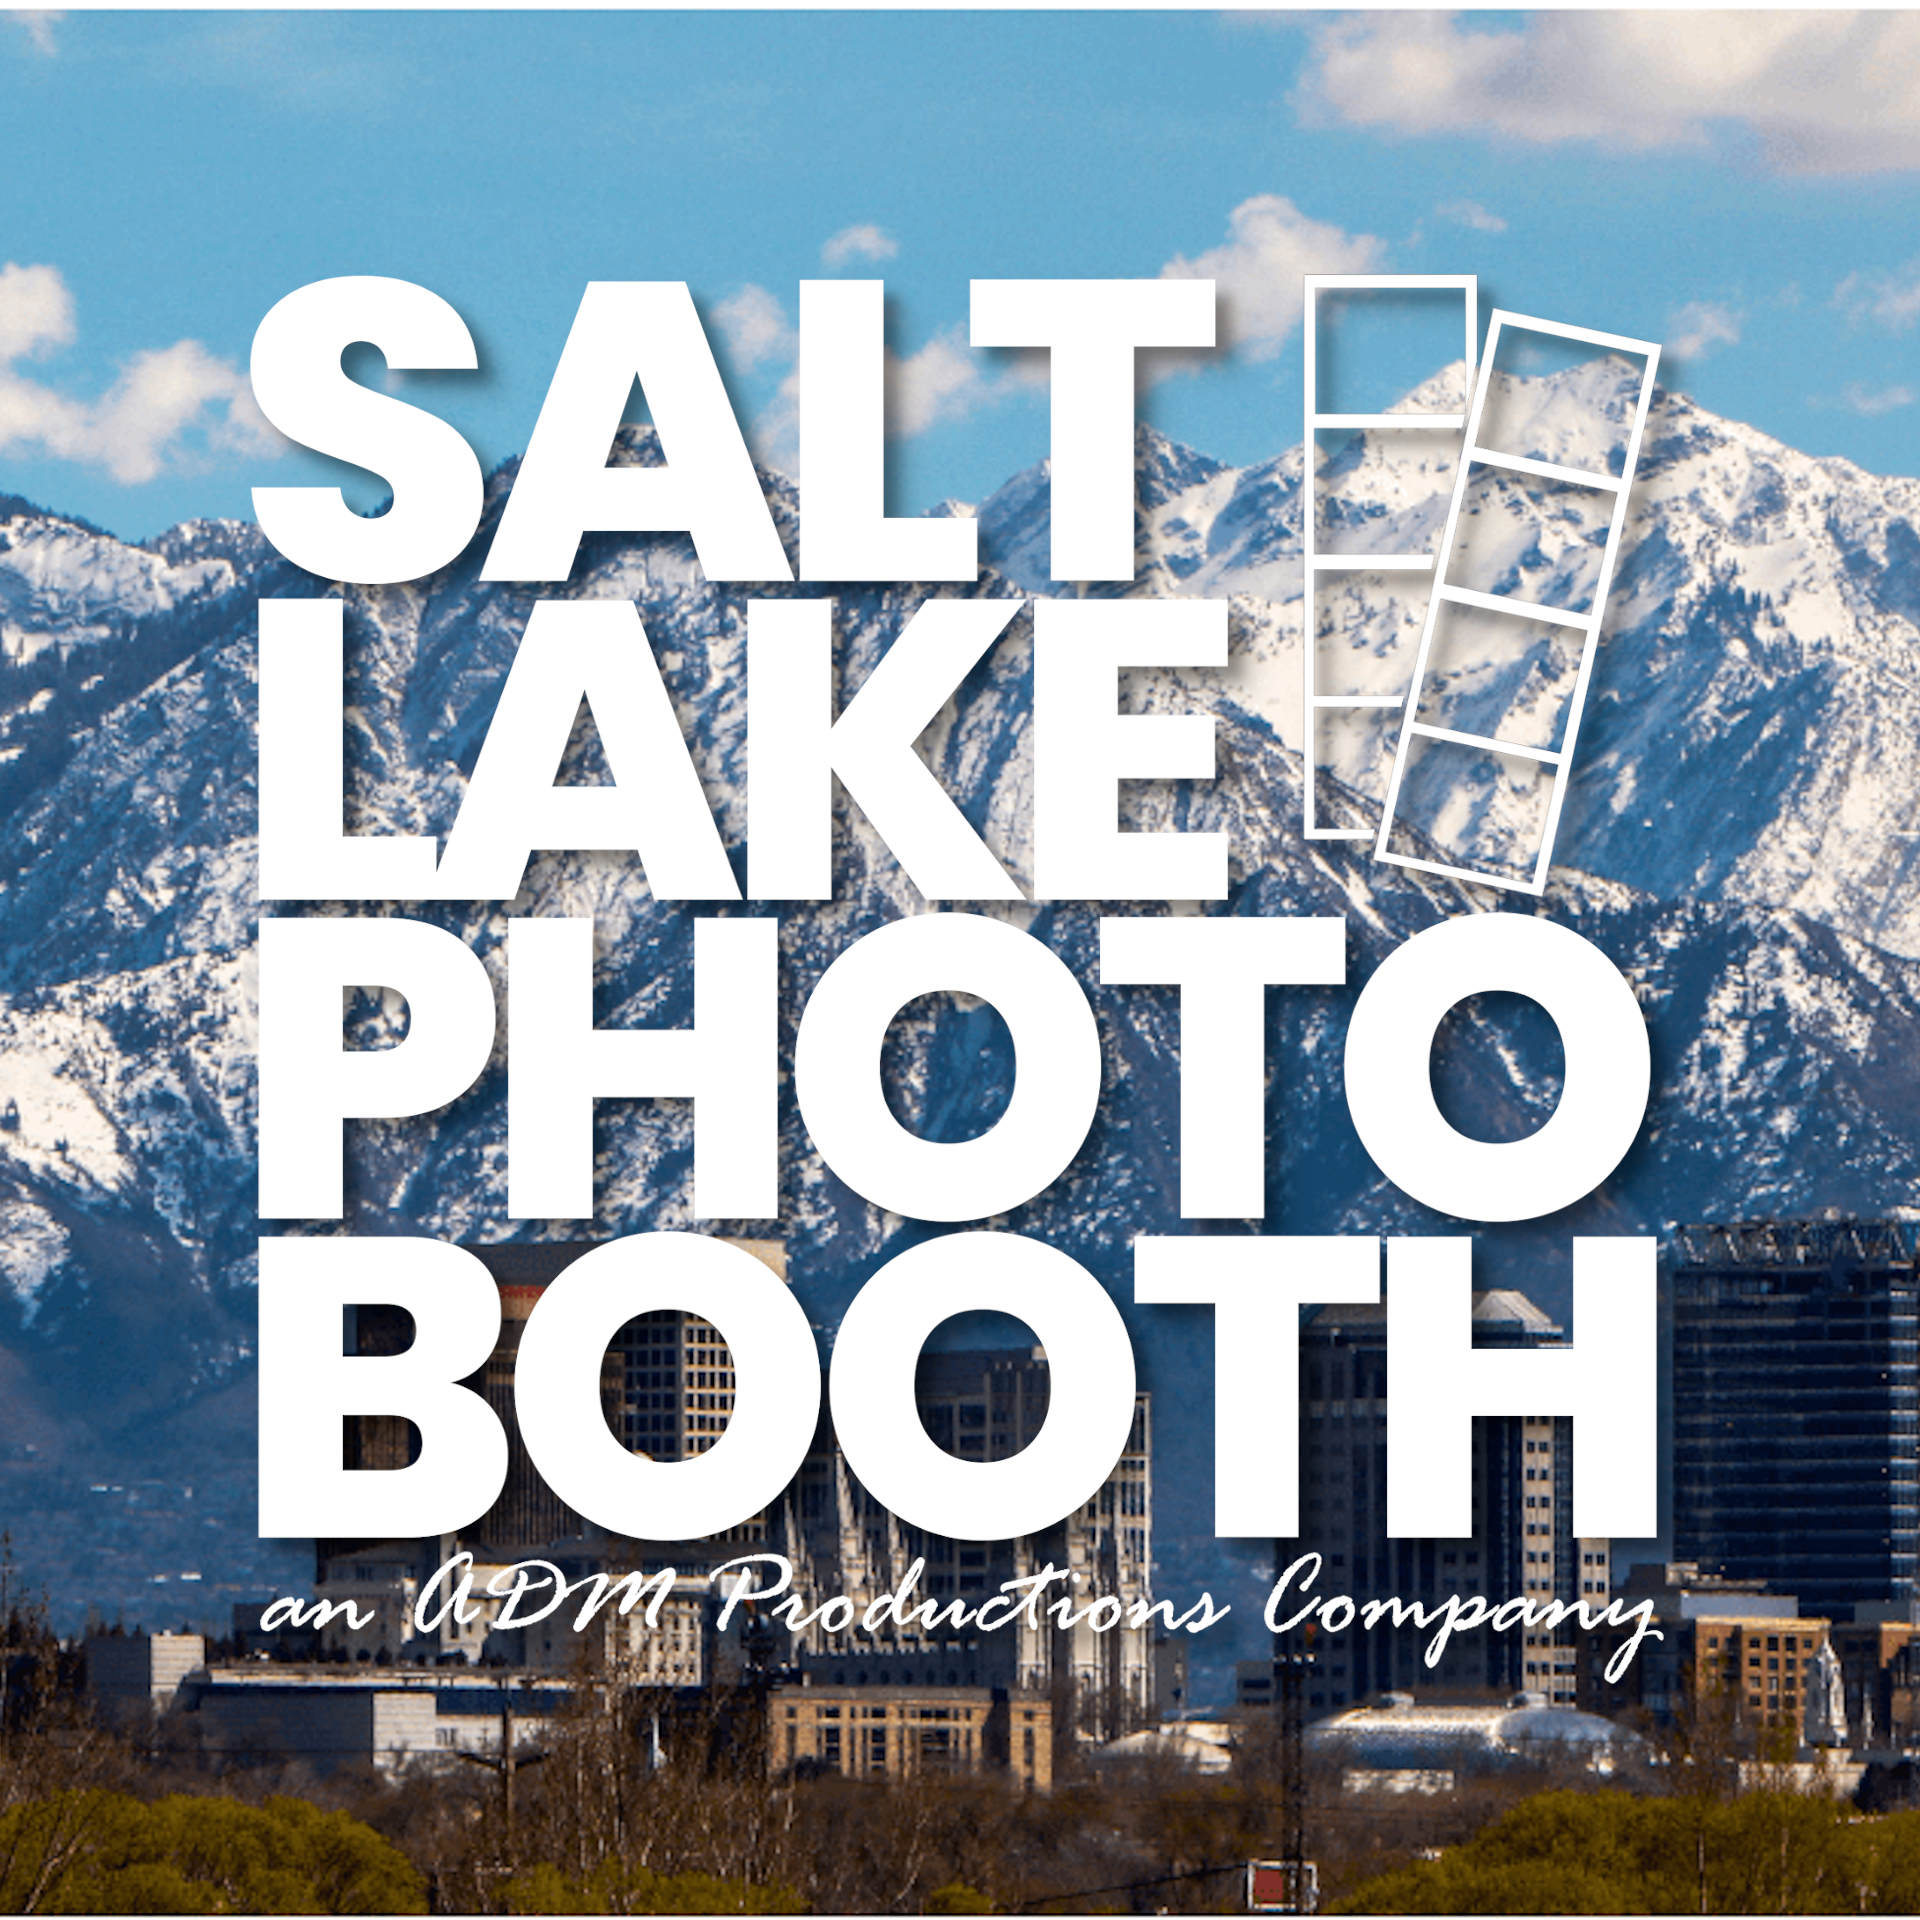 Salt Lake Photo Booth